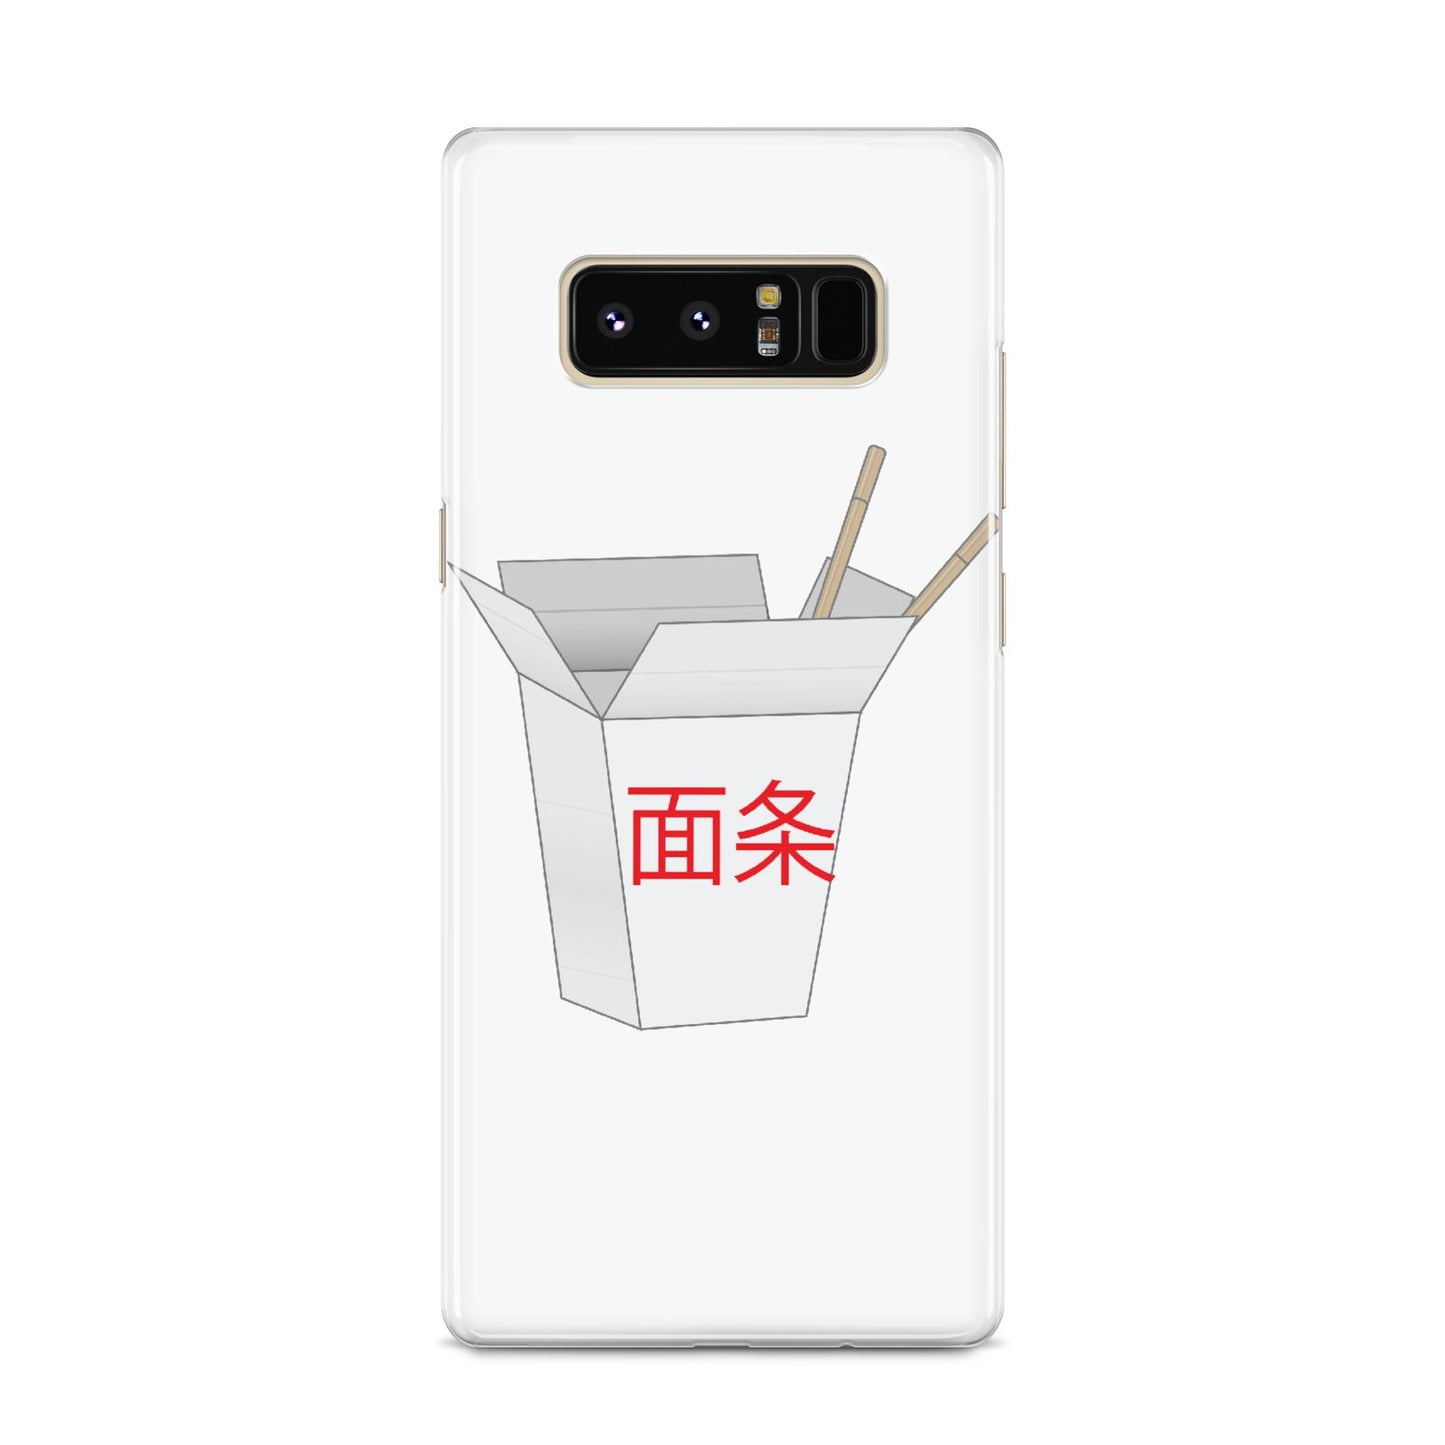 Chinese Takeaway Box Samsung Galaxy S8 Case